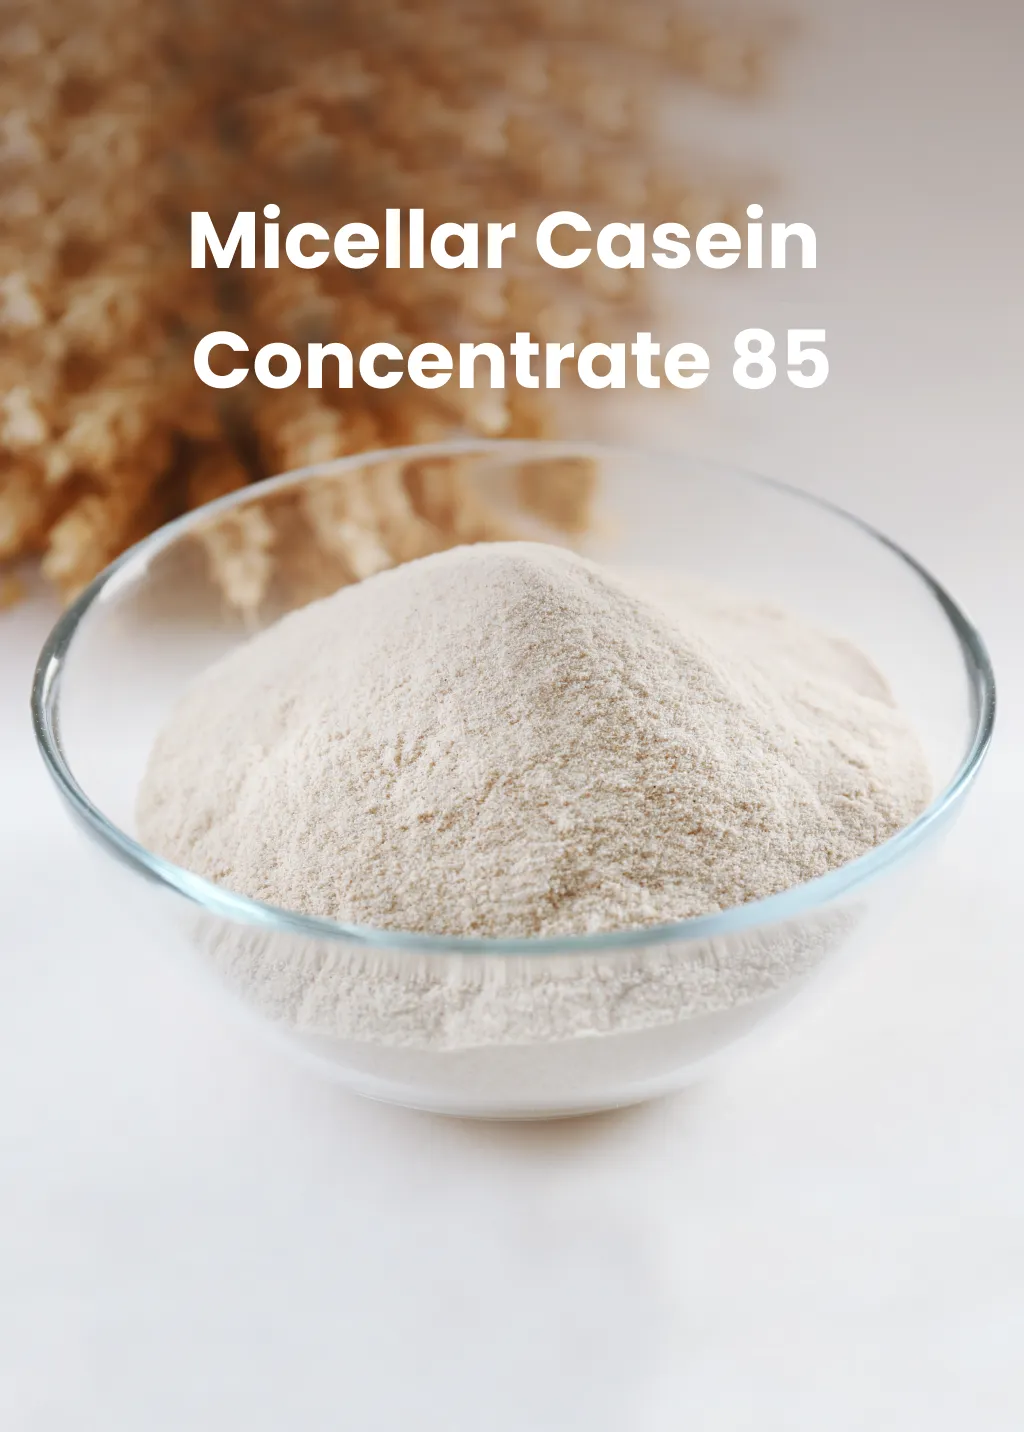 Micellar Casein Concentrate 85 from Milk Powder Asia